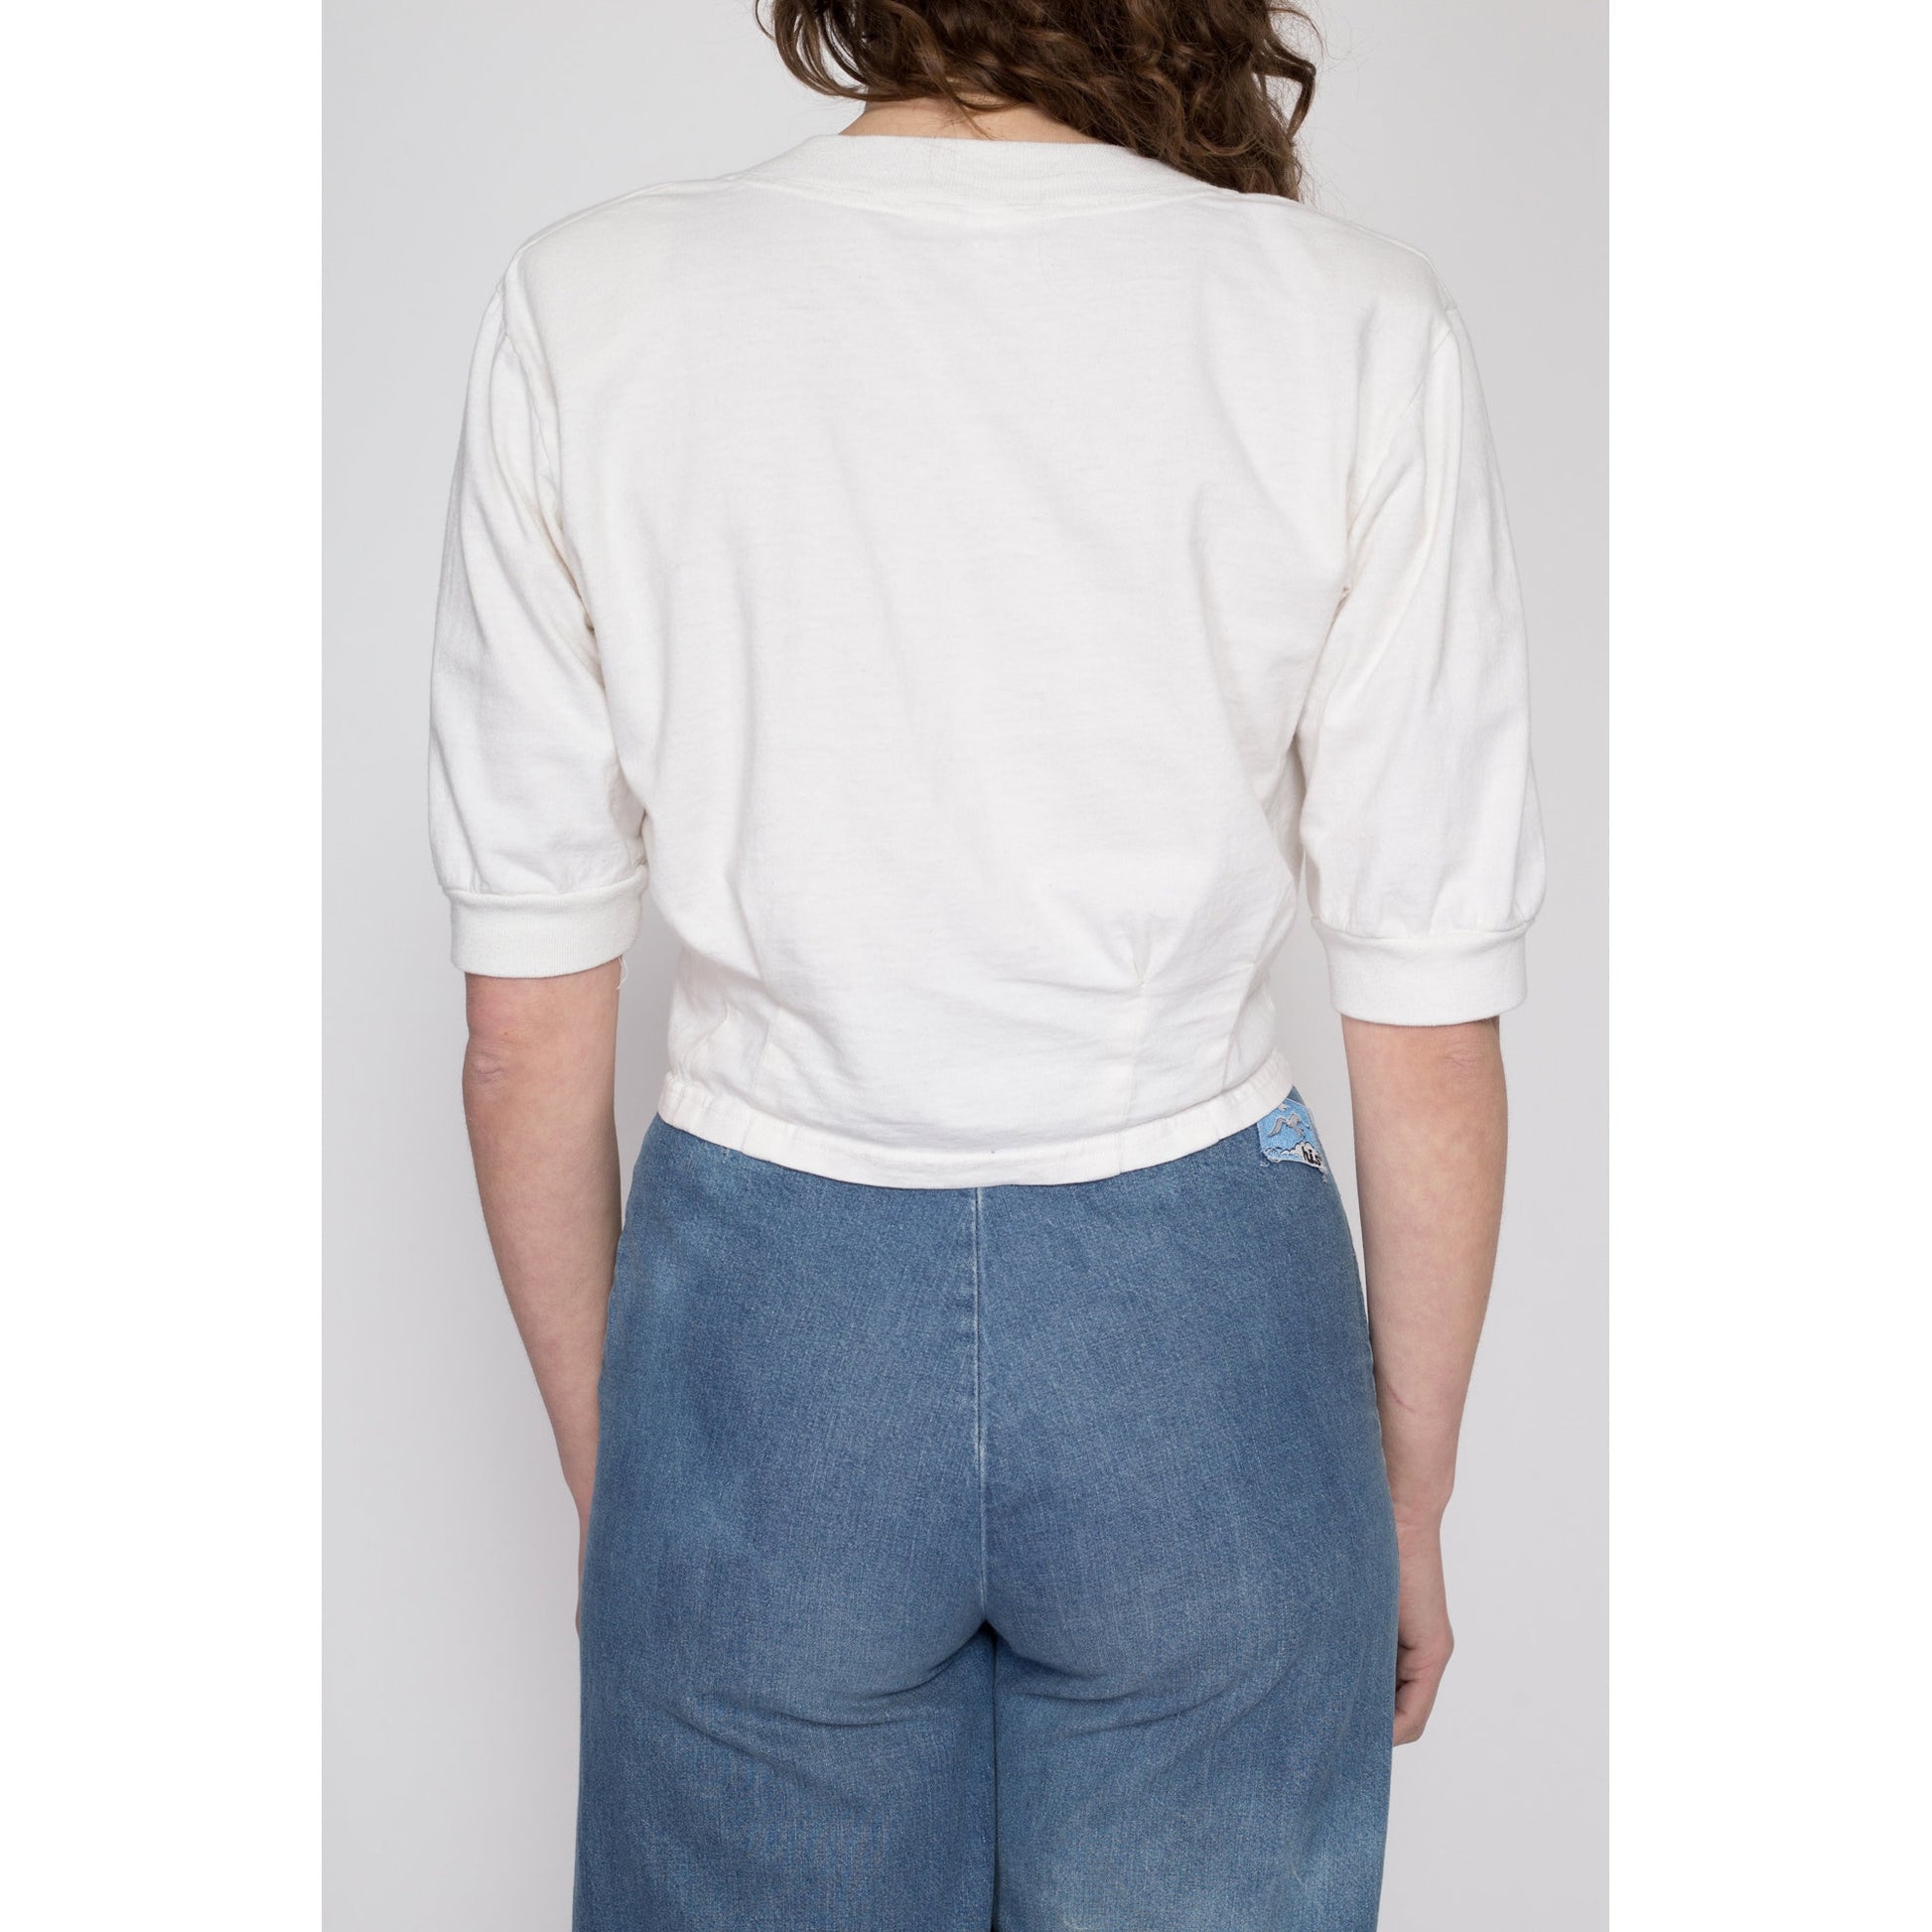 Large 80s White Button Up Crop Top | Vintage Short Sleeve V Neck Cropped Blouse